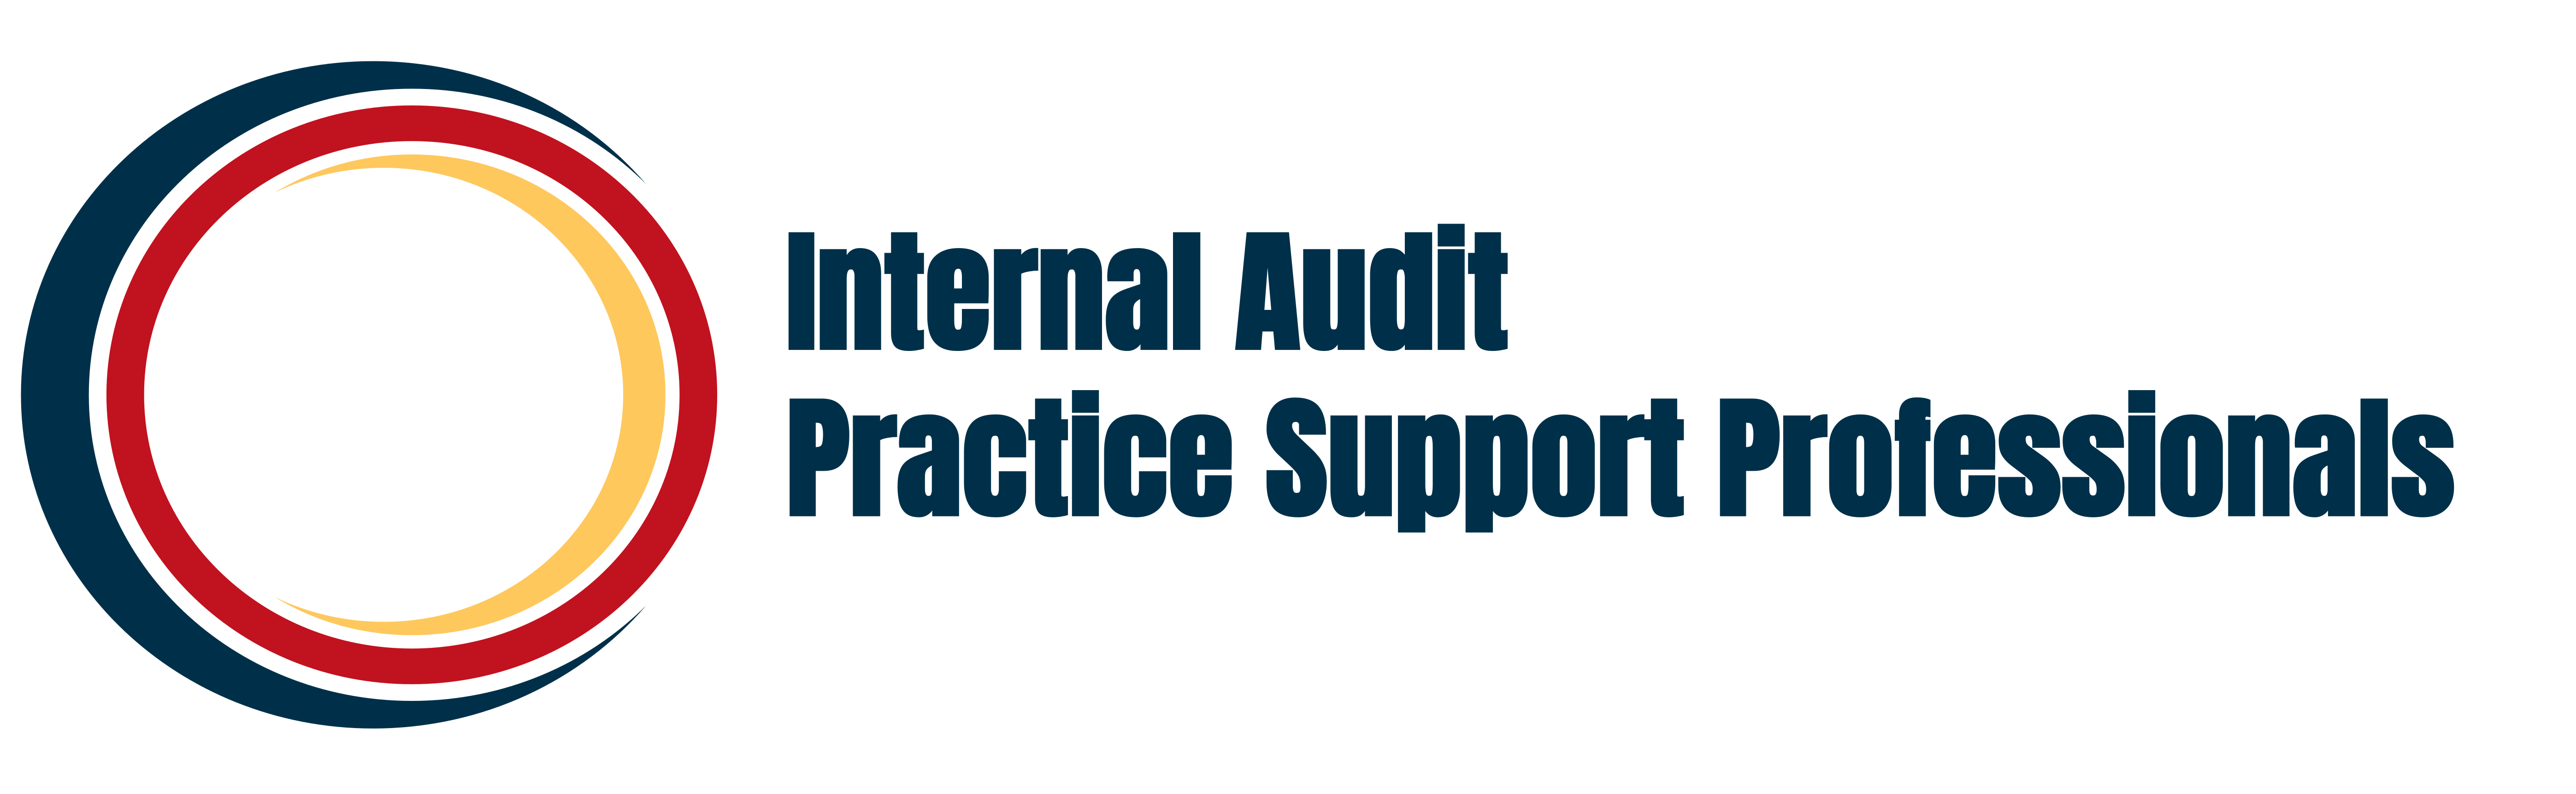 Internal Audit Practice Support Professionals Community Logo